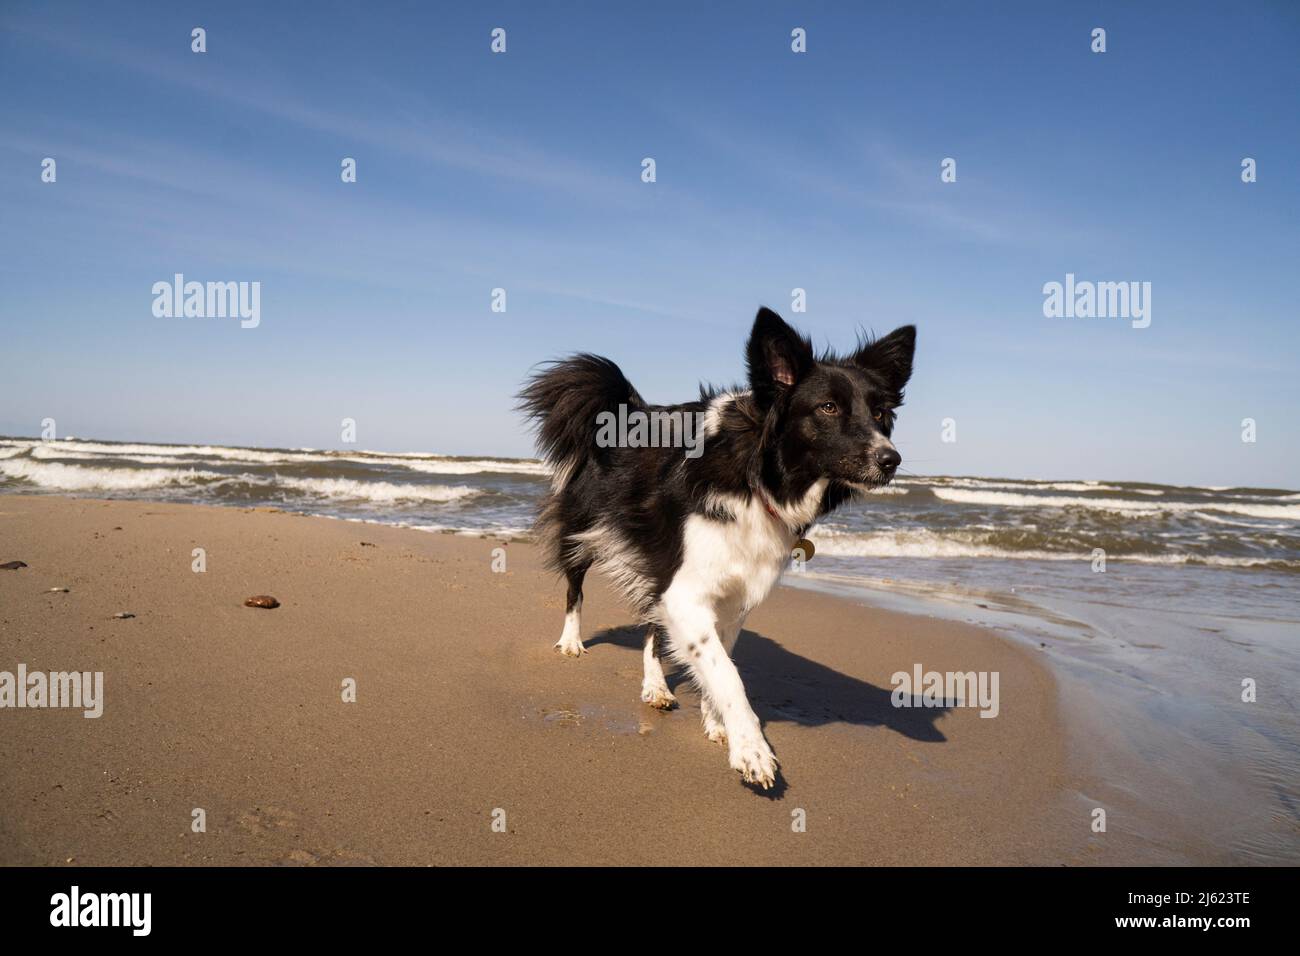 Border collie dog walking on coastline at beach Stock Photo